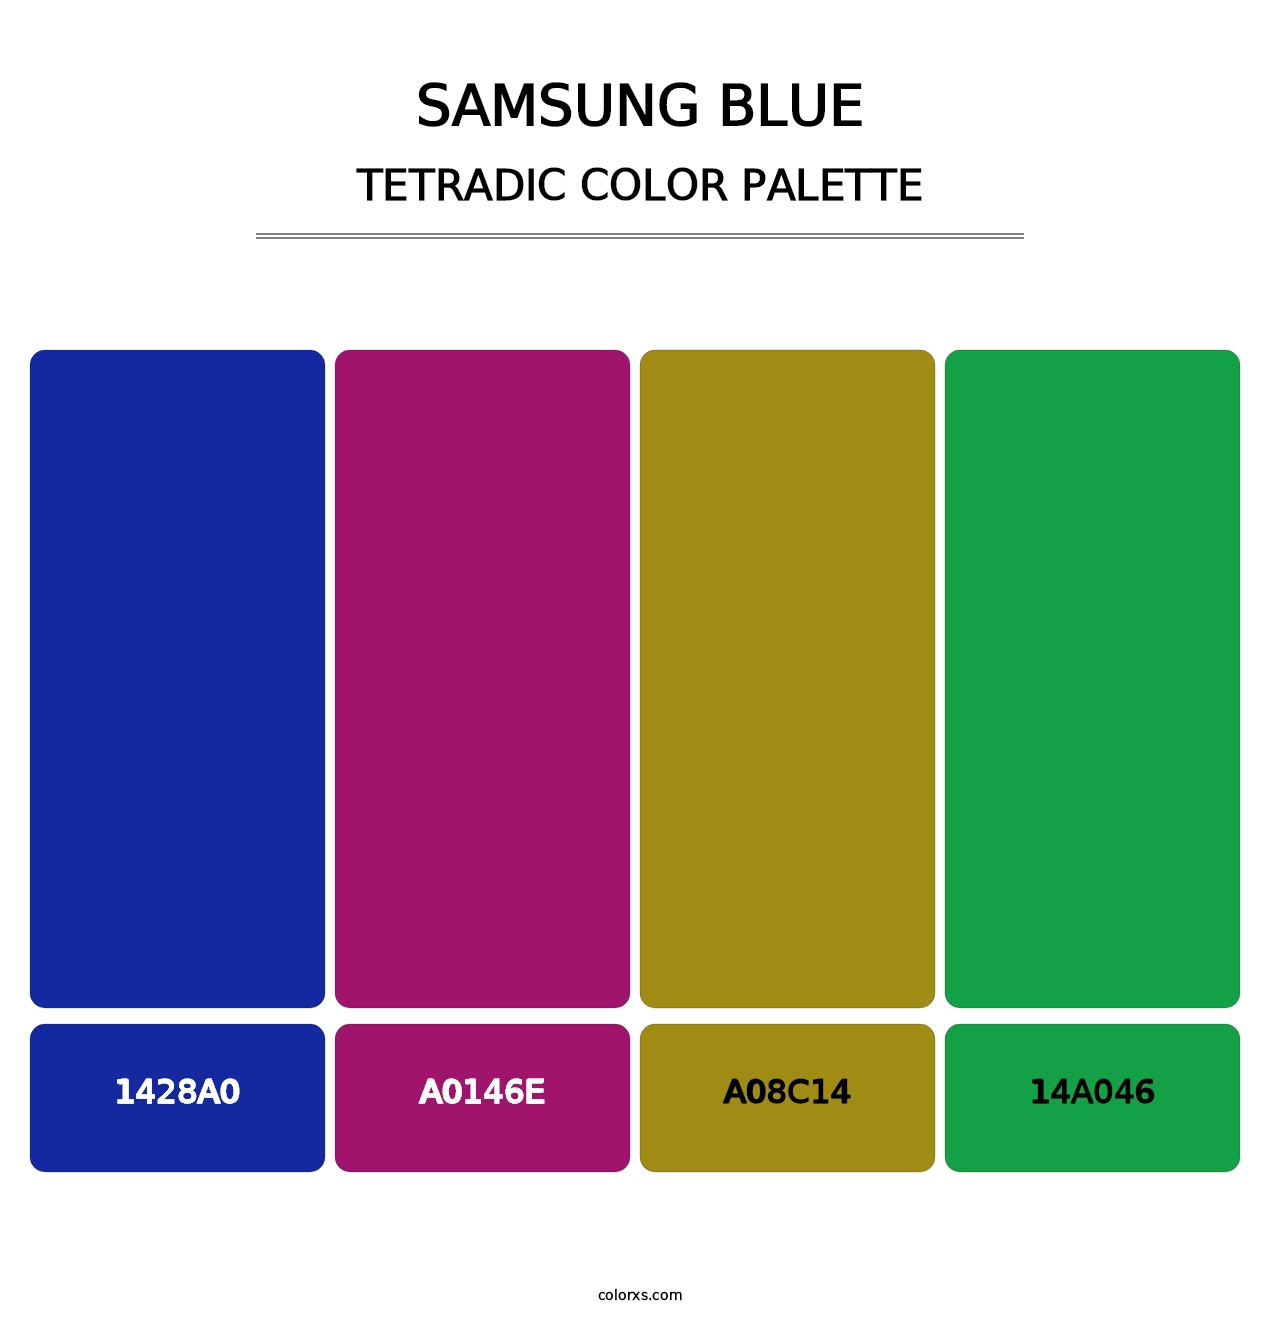 Samsung Blue - Tetradic Color Palette